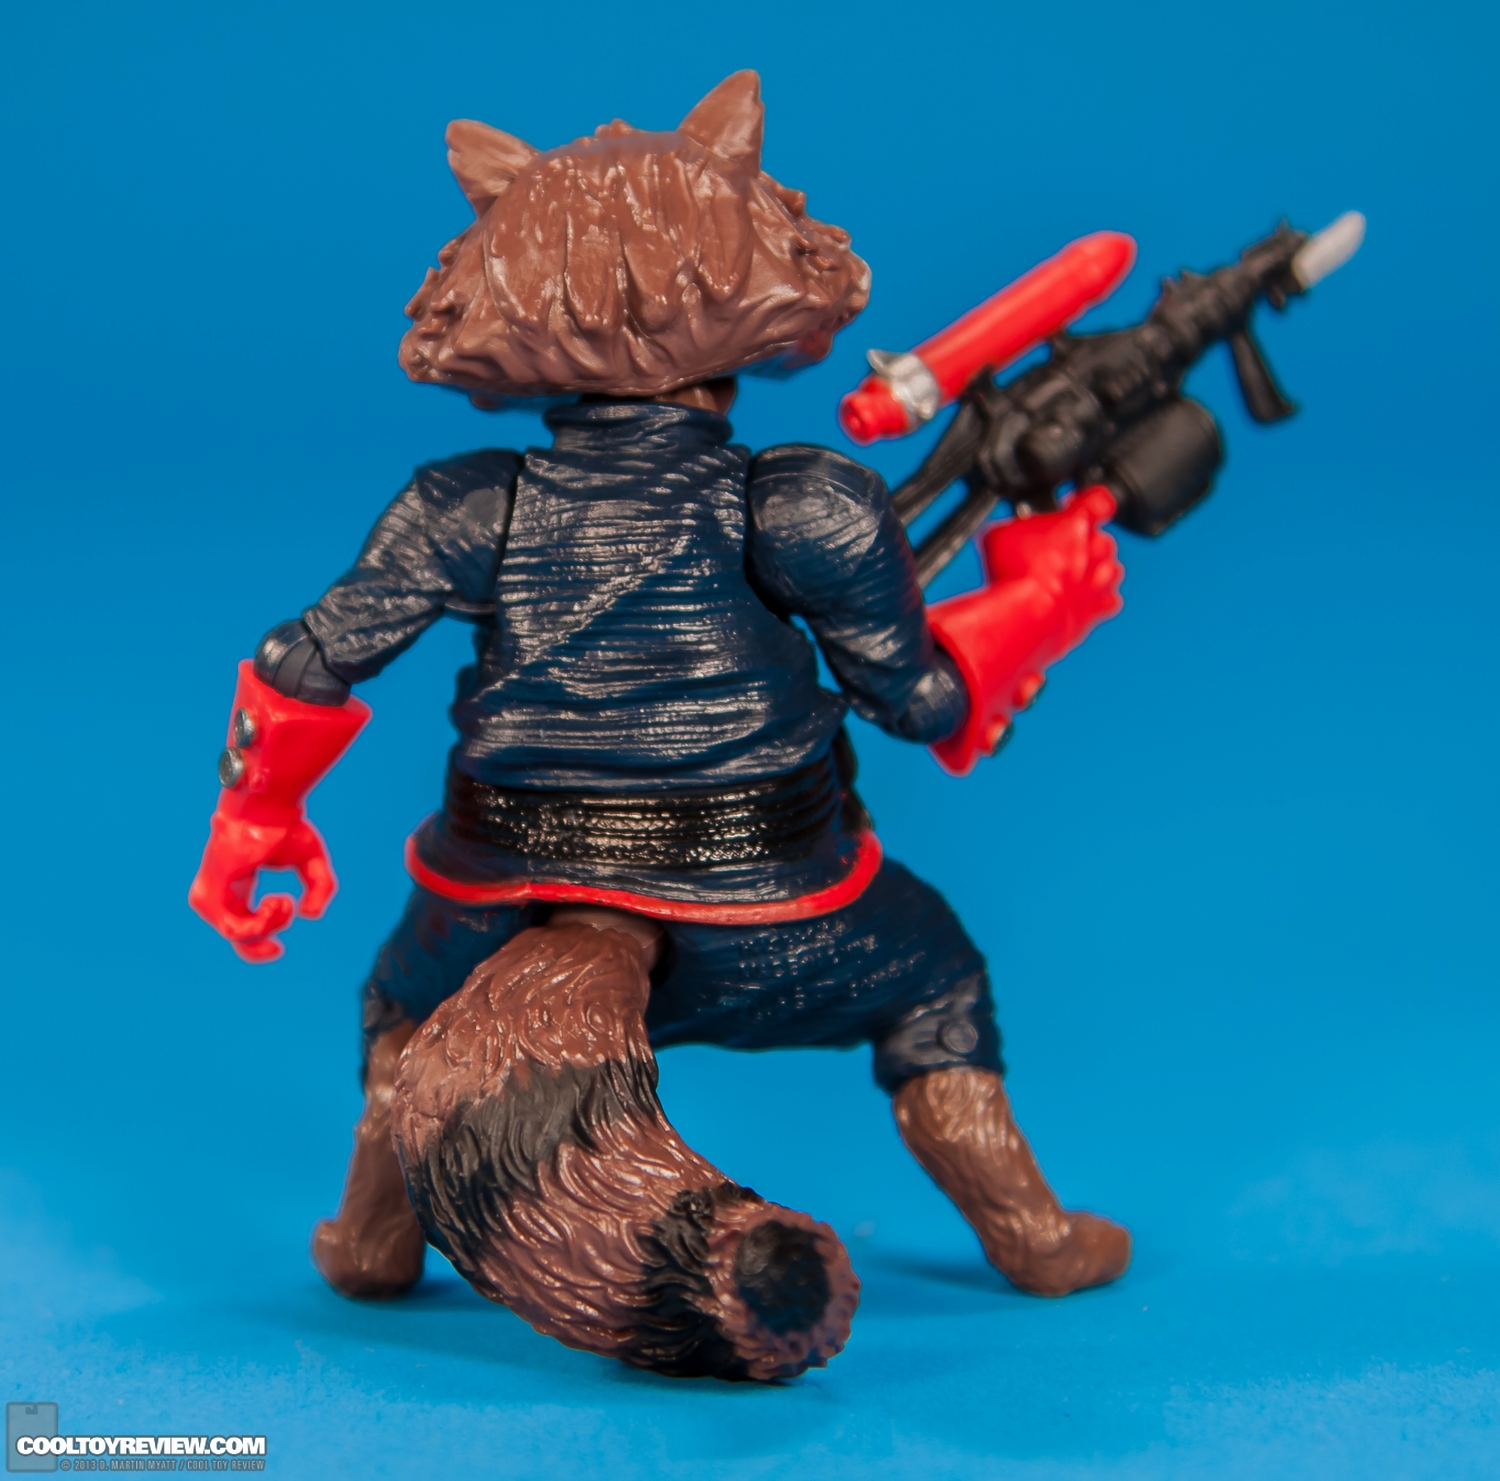 Marvel-Legends-Rocket-Raccoon-Series-Build-A-Figure-Hasbro-004.jpg